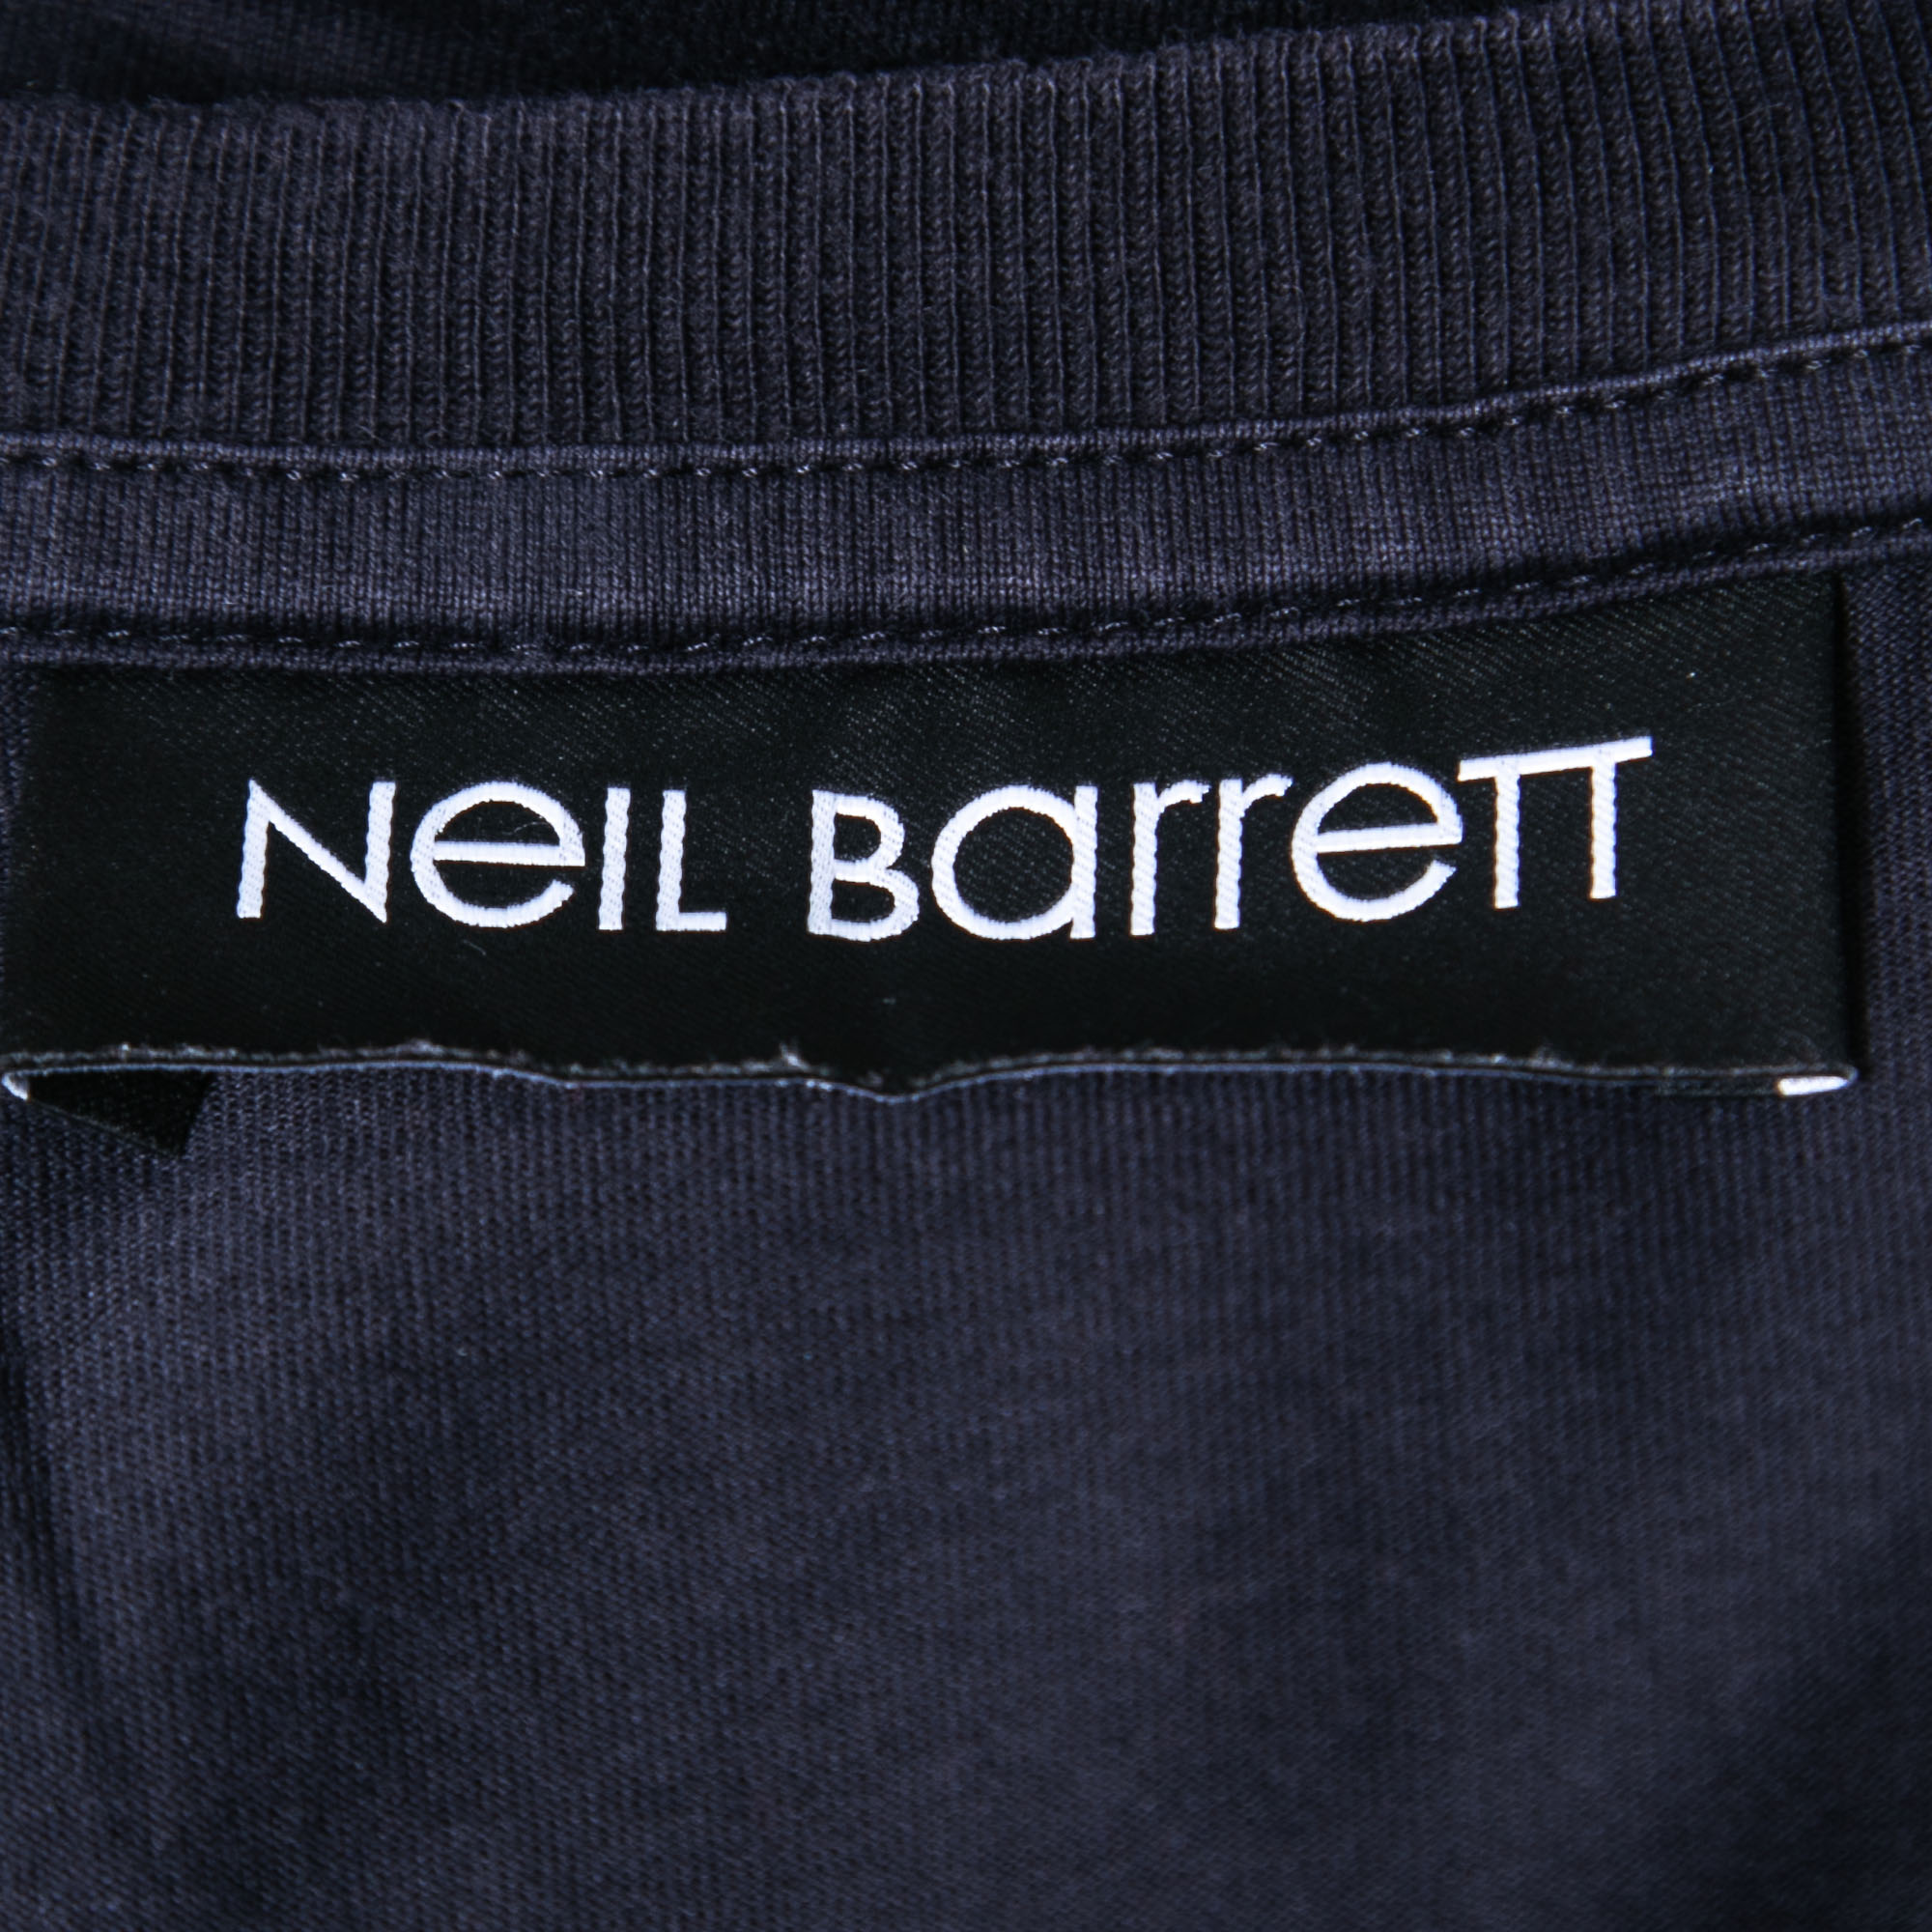 Neil Barrett Navy Blue Lightning Bolt Print Cotton Slim Fit T-Shirt S